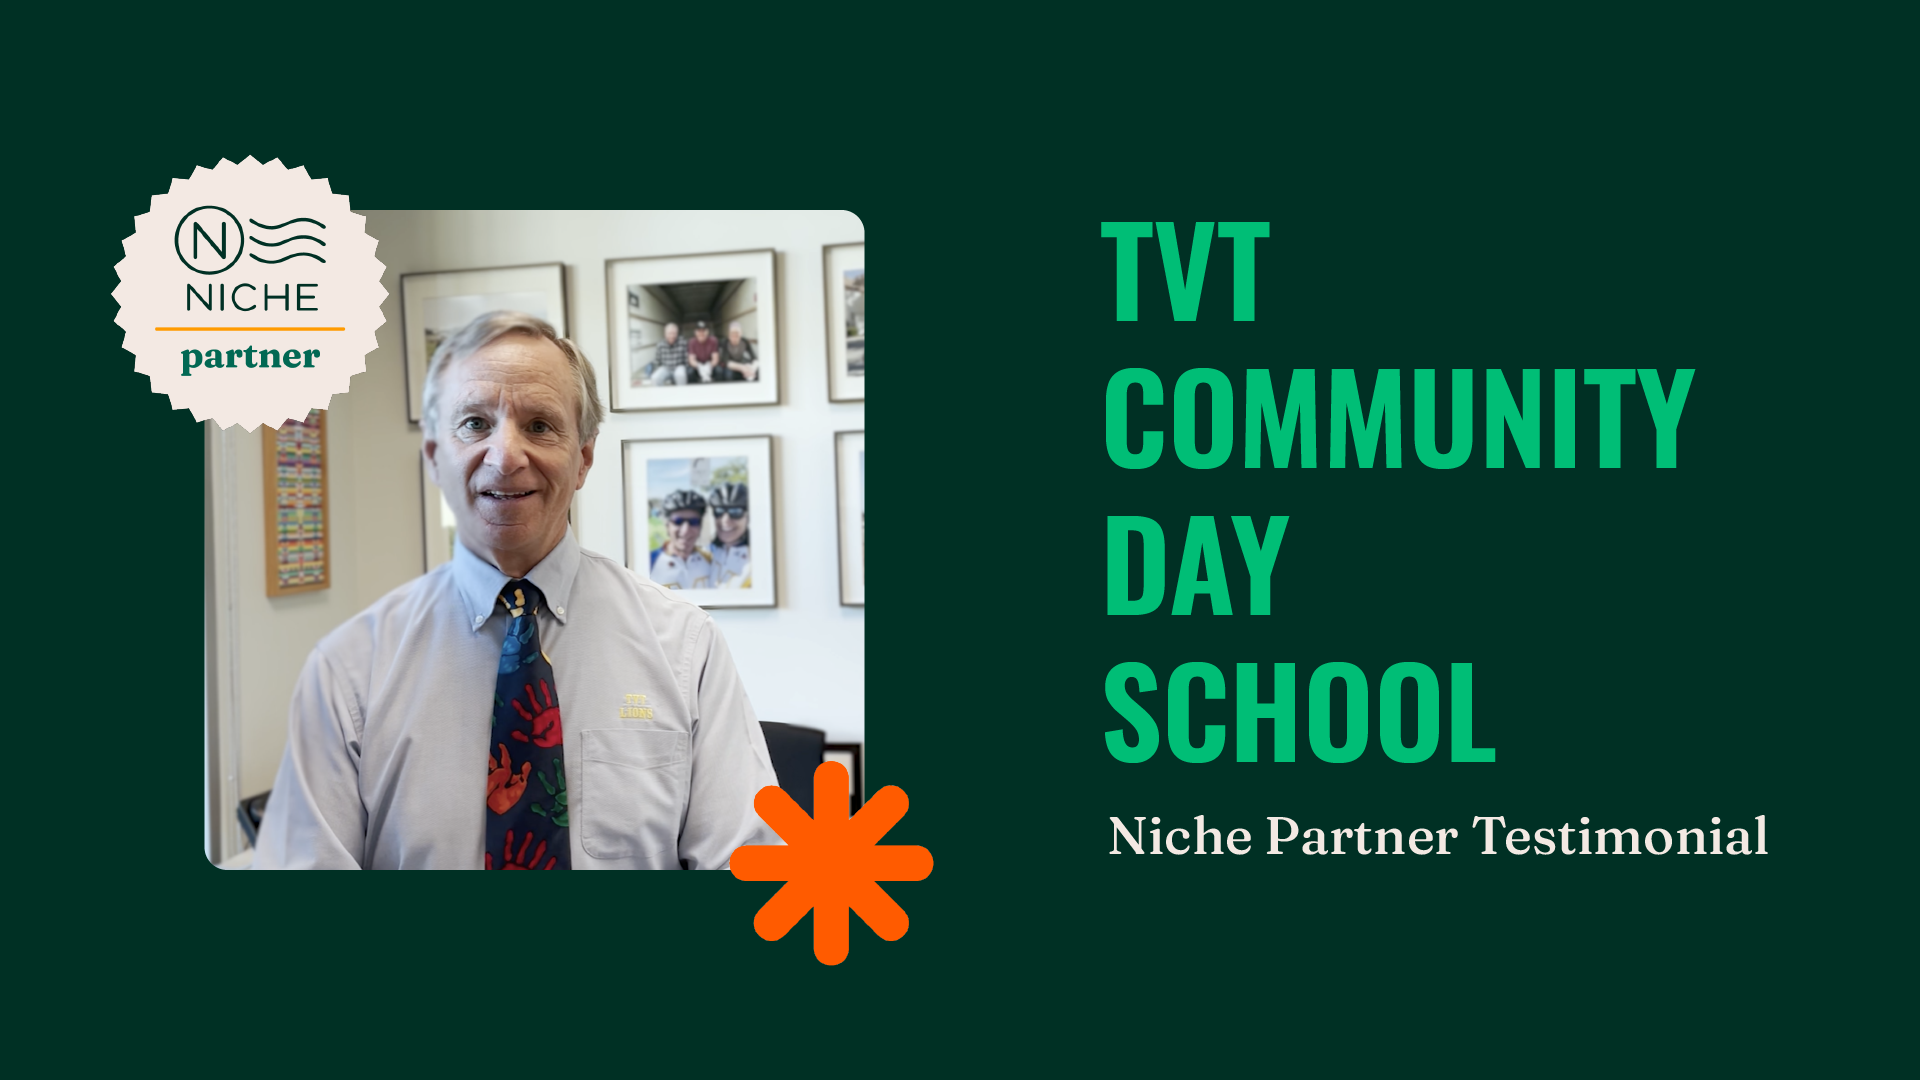 TVT Community Day School